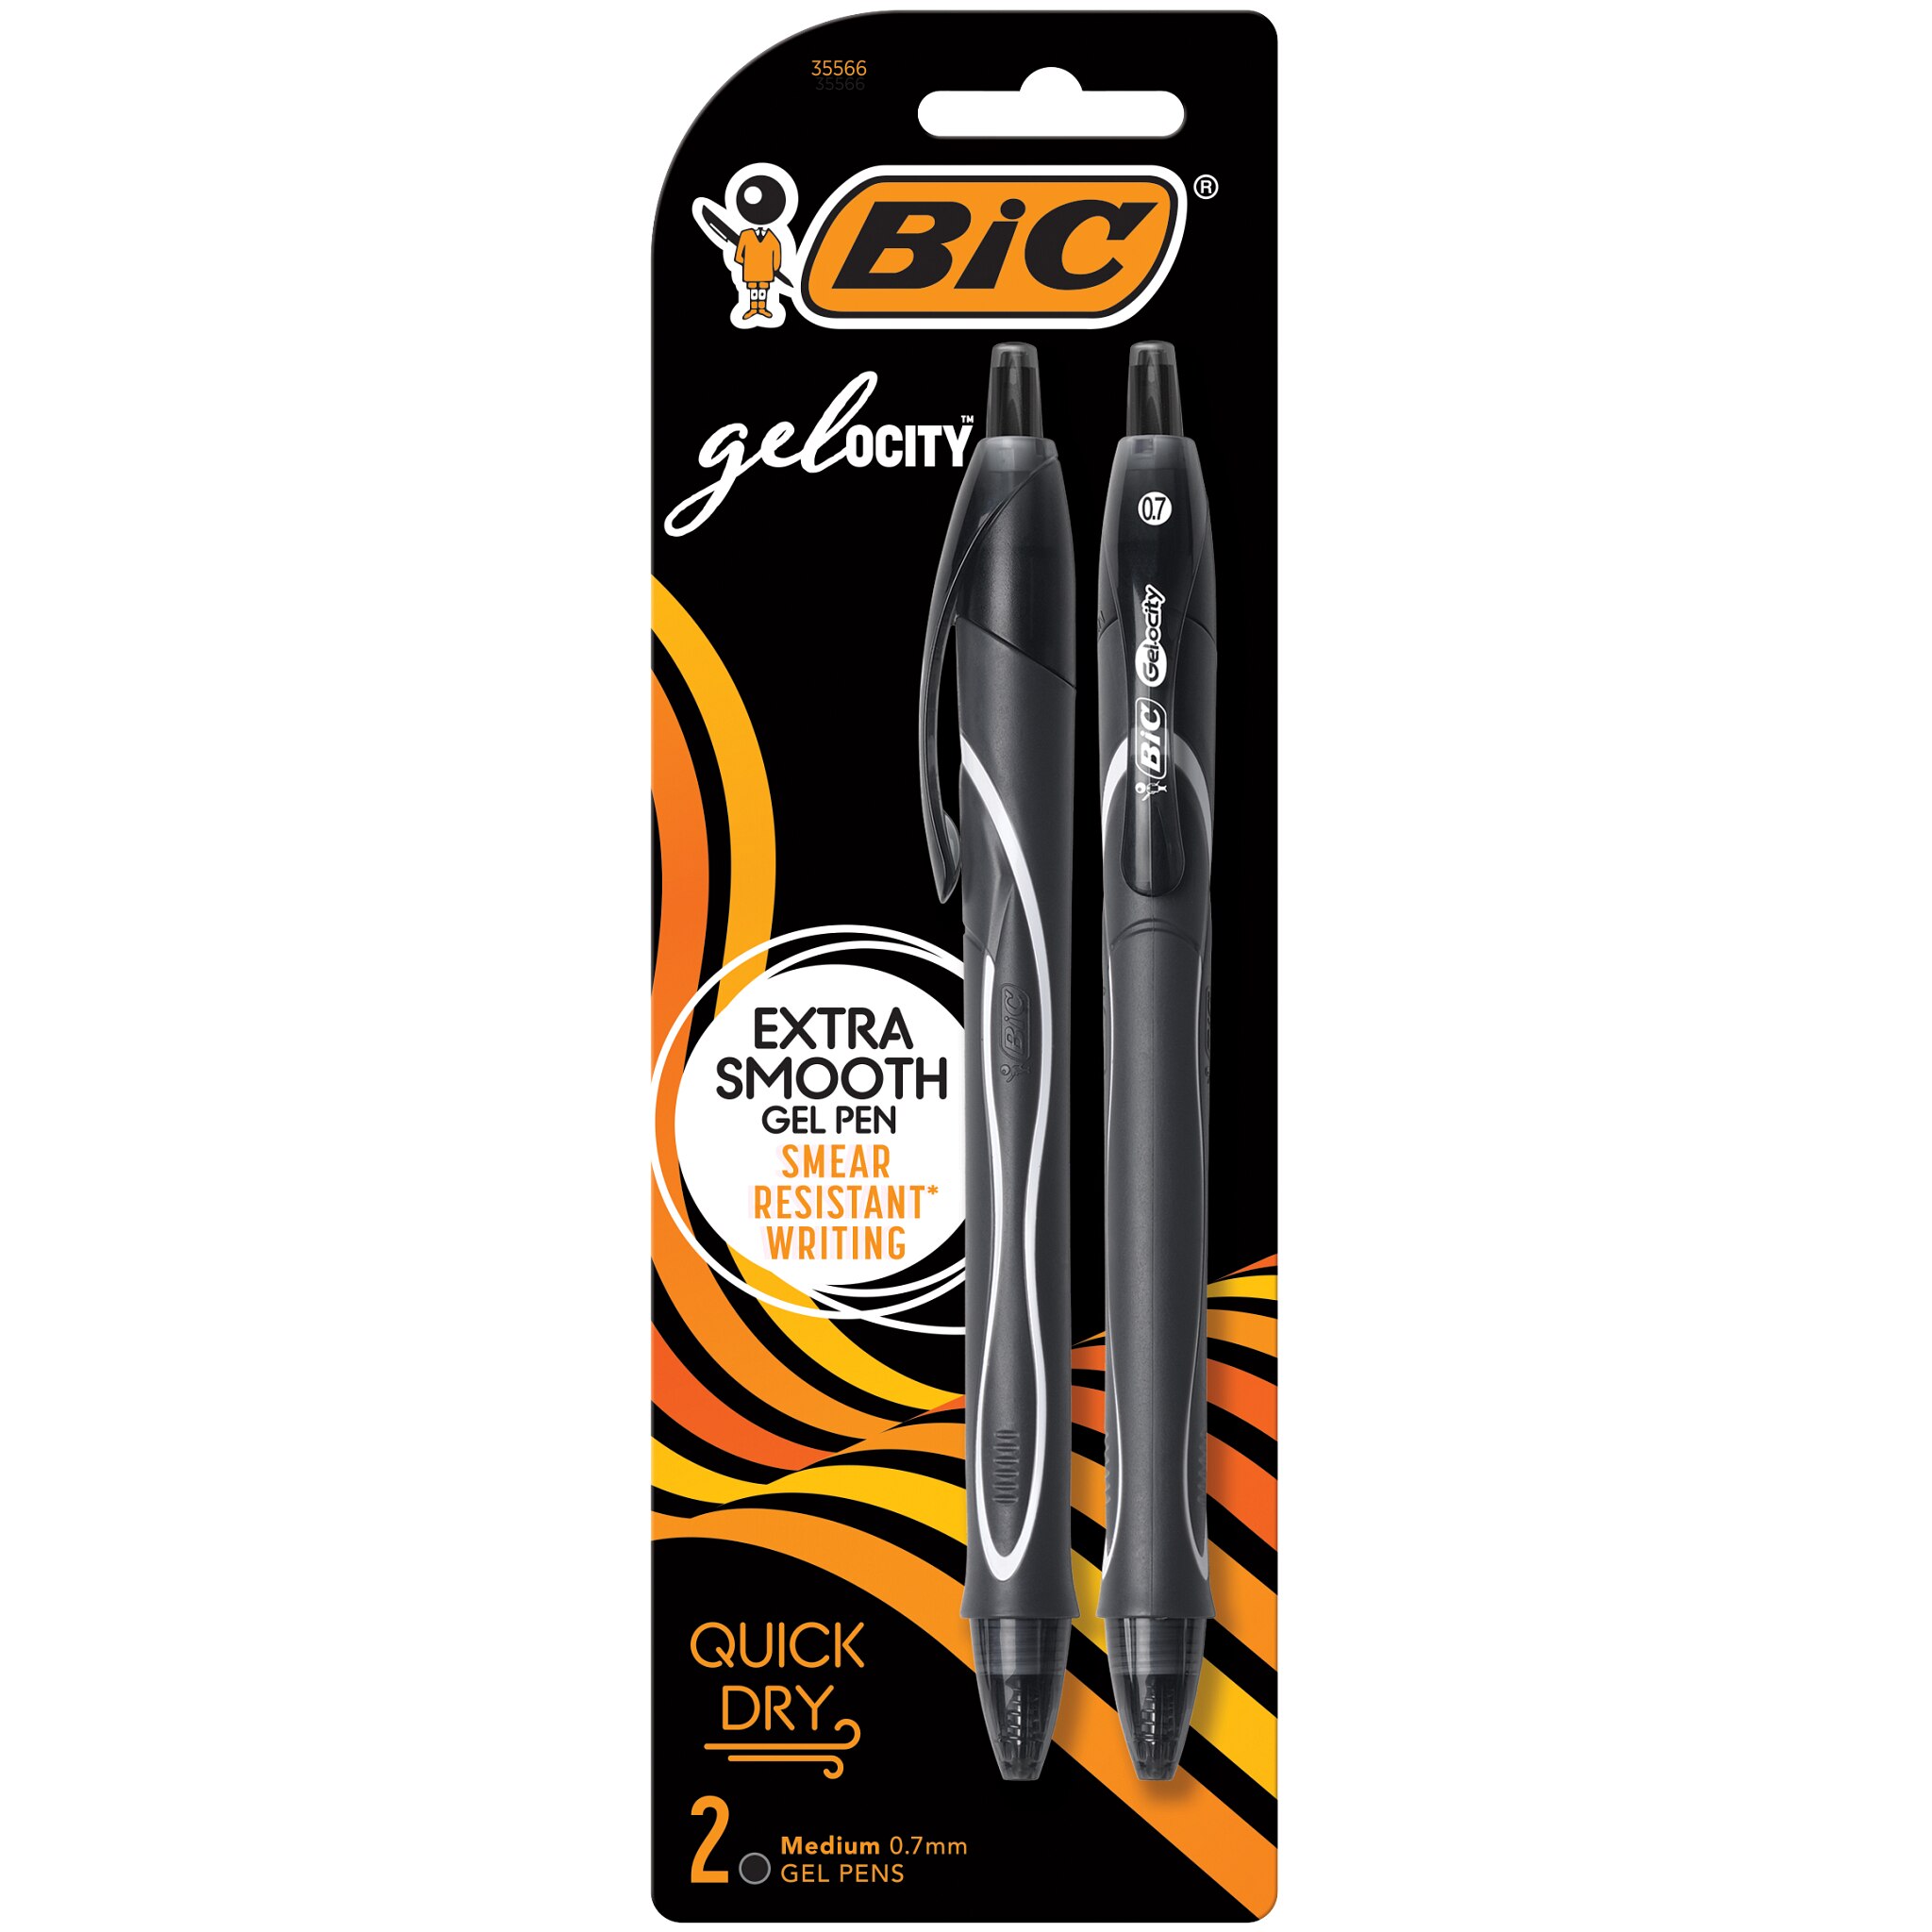 BIC Gel-ocity Quick Dry Gel Pen, Medium Point, Black, 2 ct